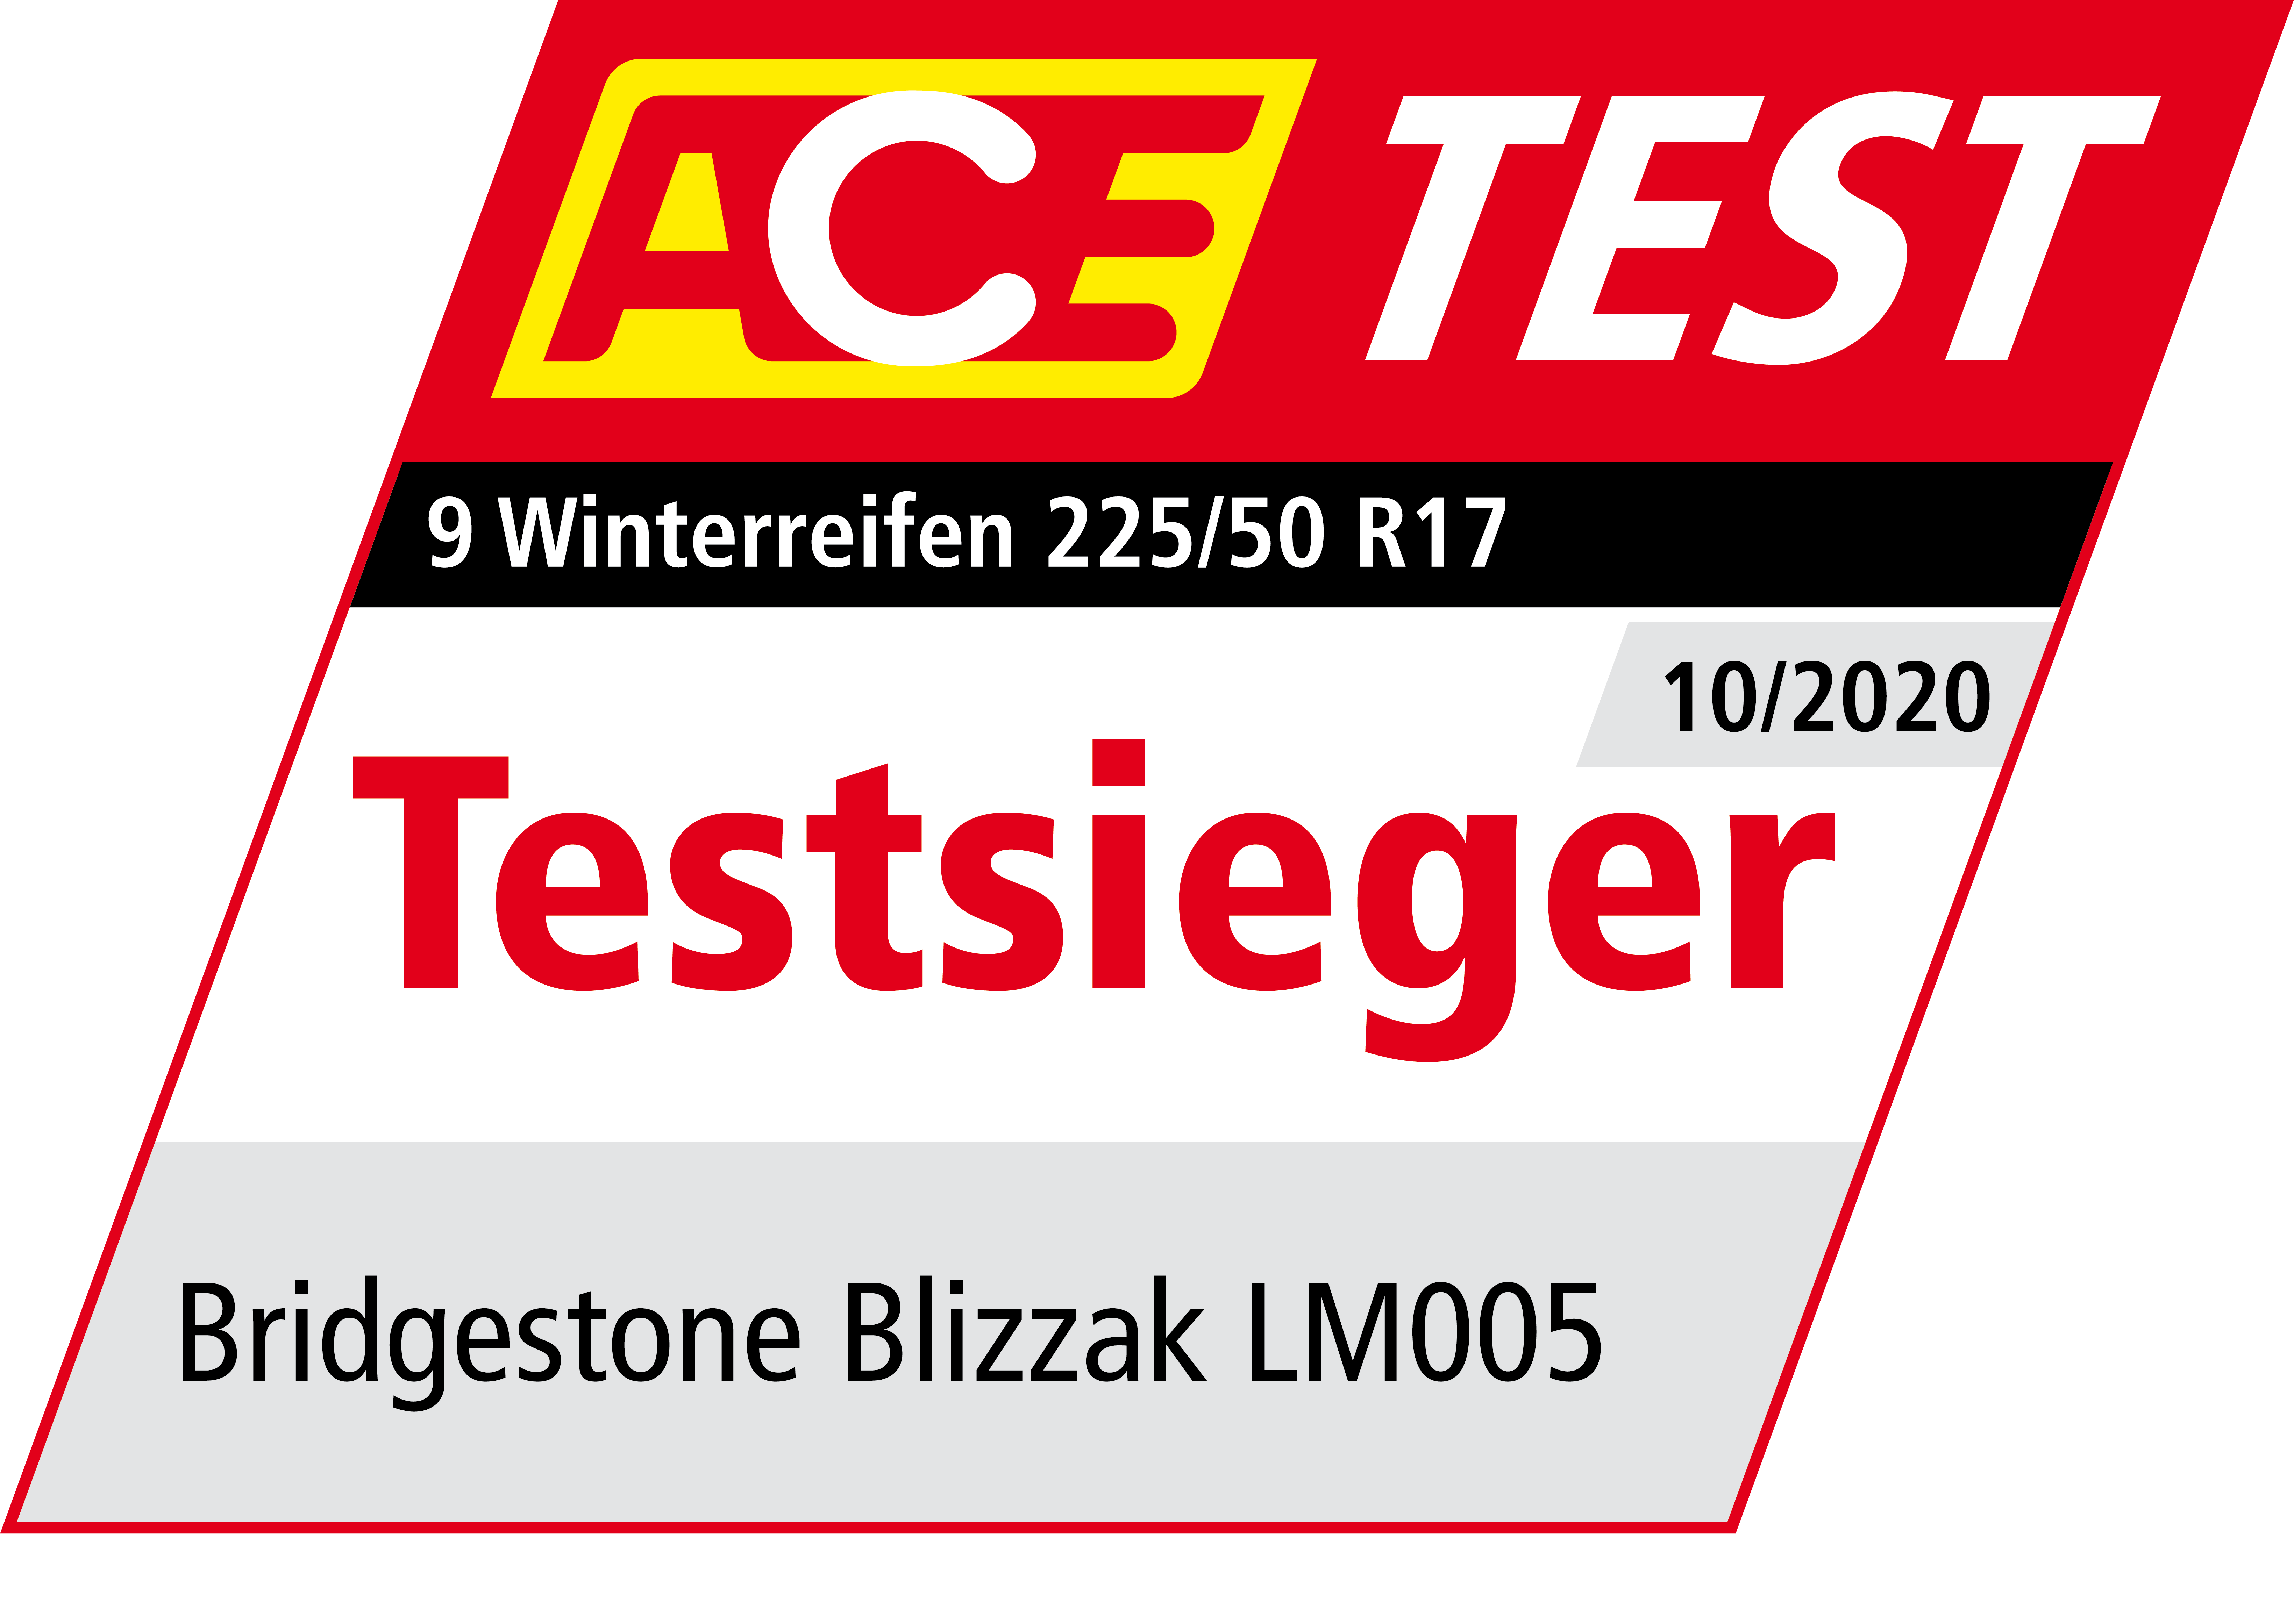 Bridgestone Blizzak LM005 ACE Test